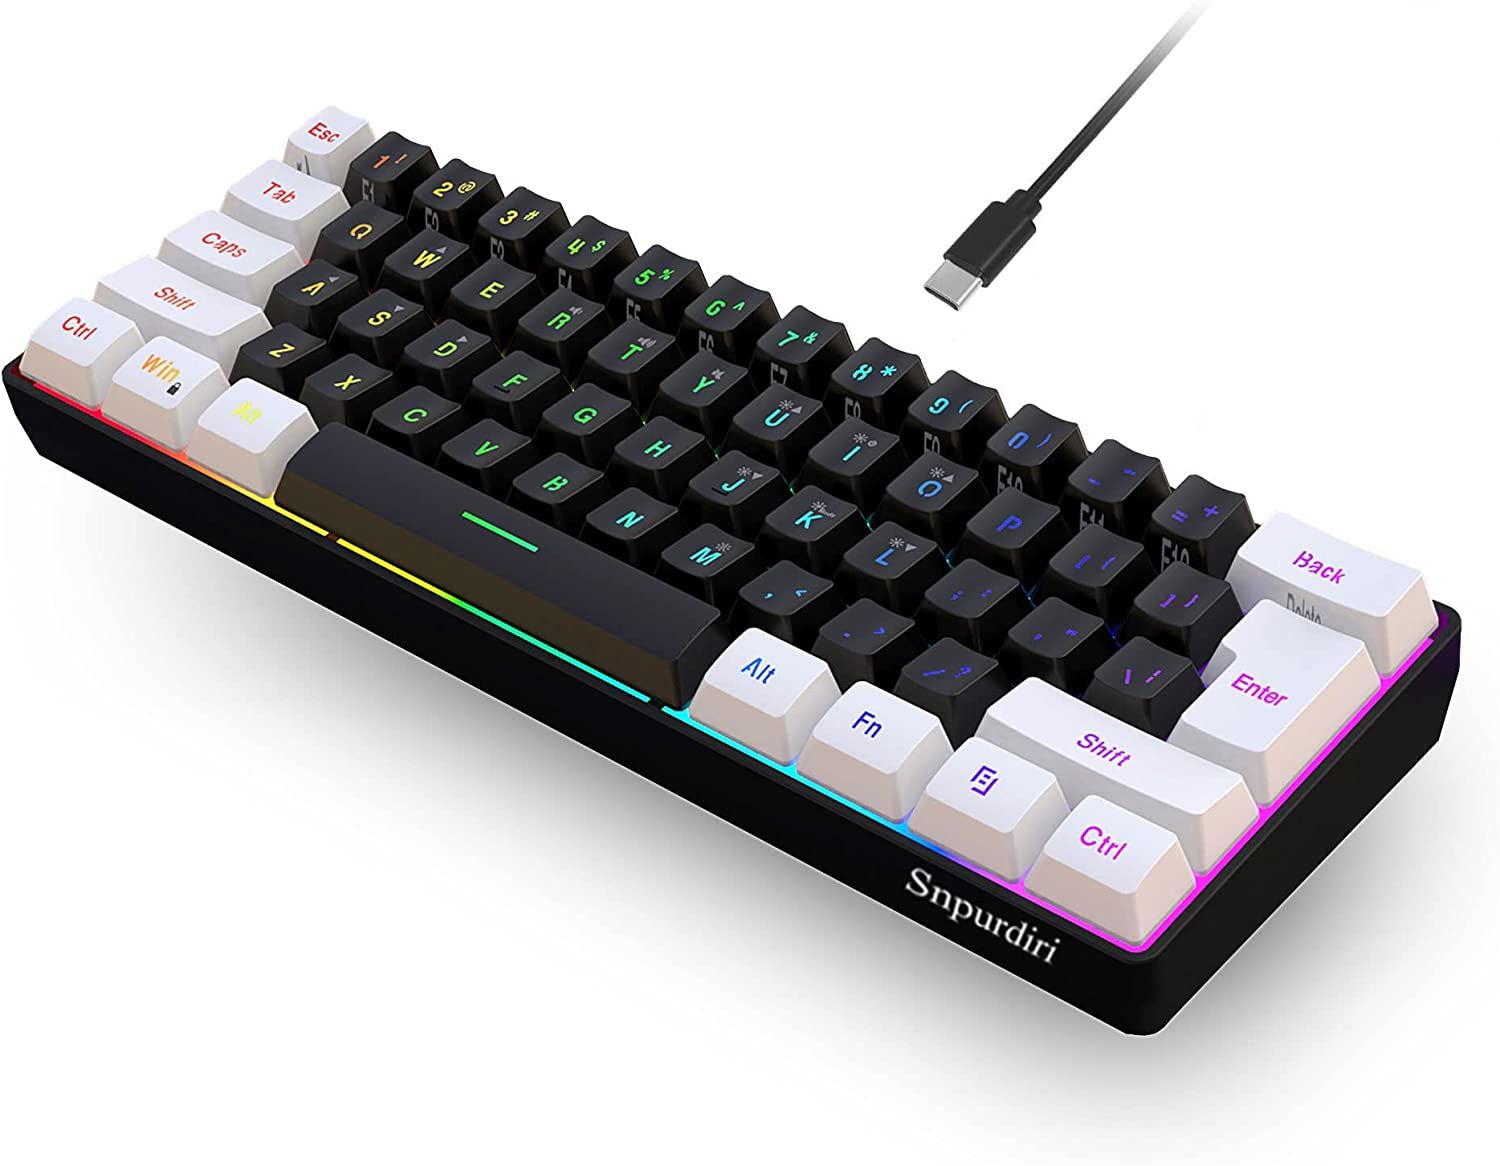 Snpurdiri Wired Gaming Keyboard